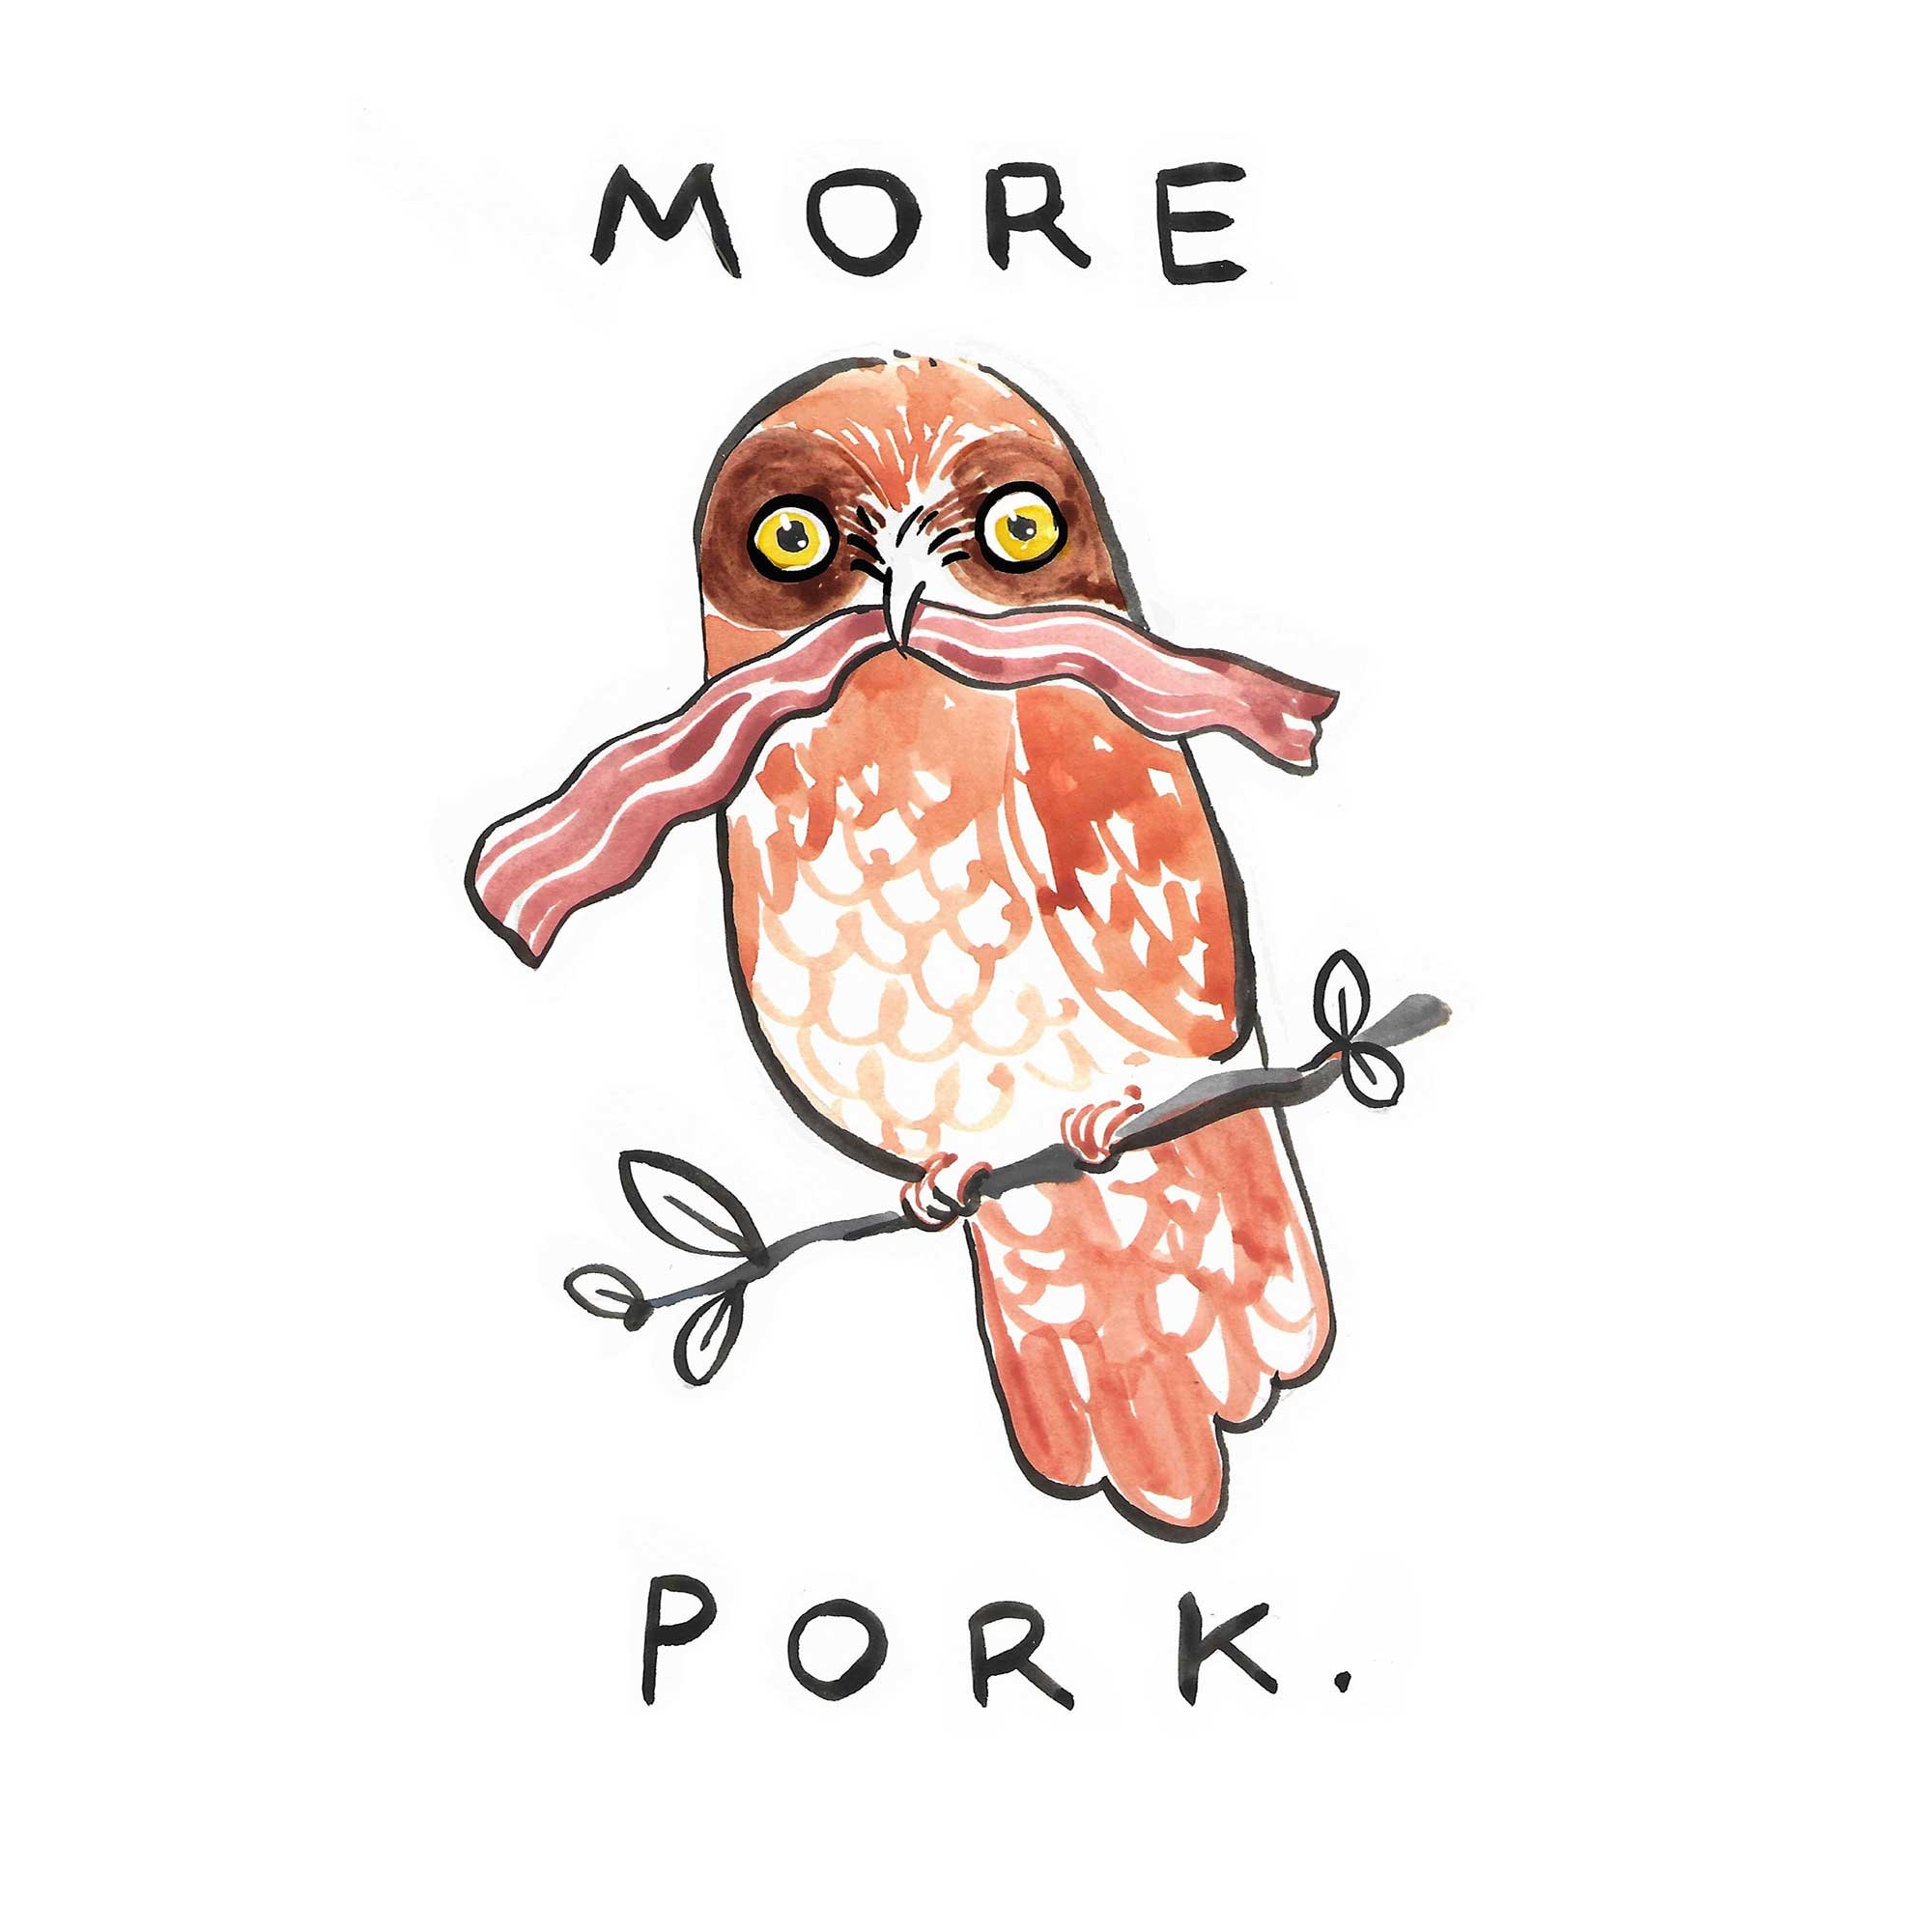 pork.jpg